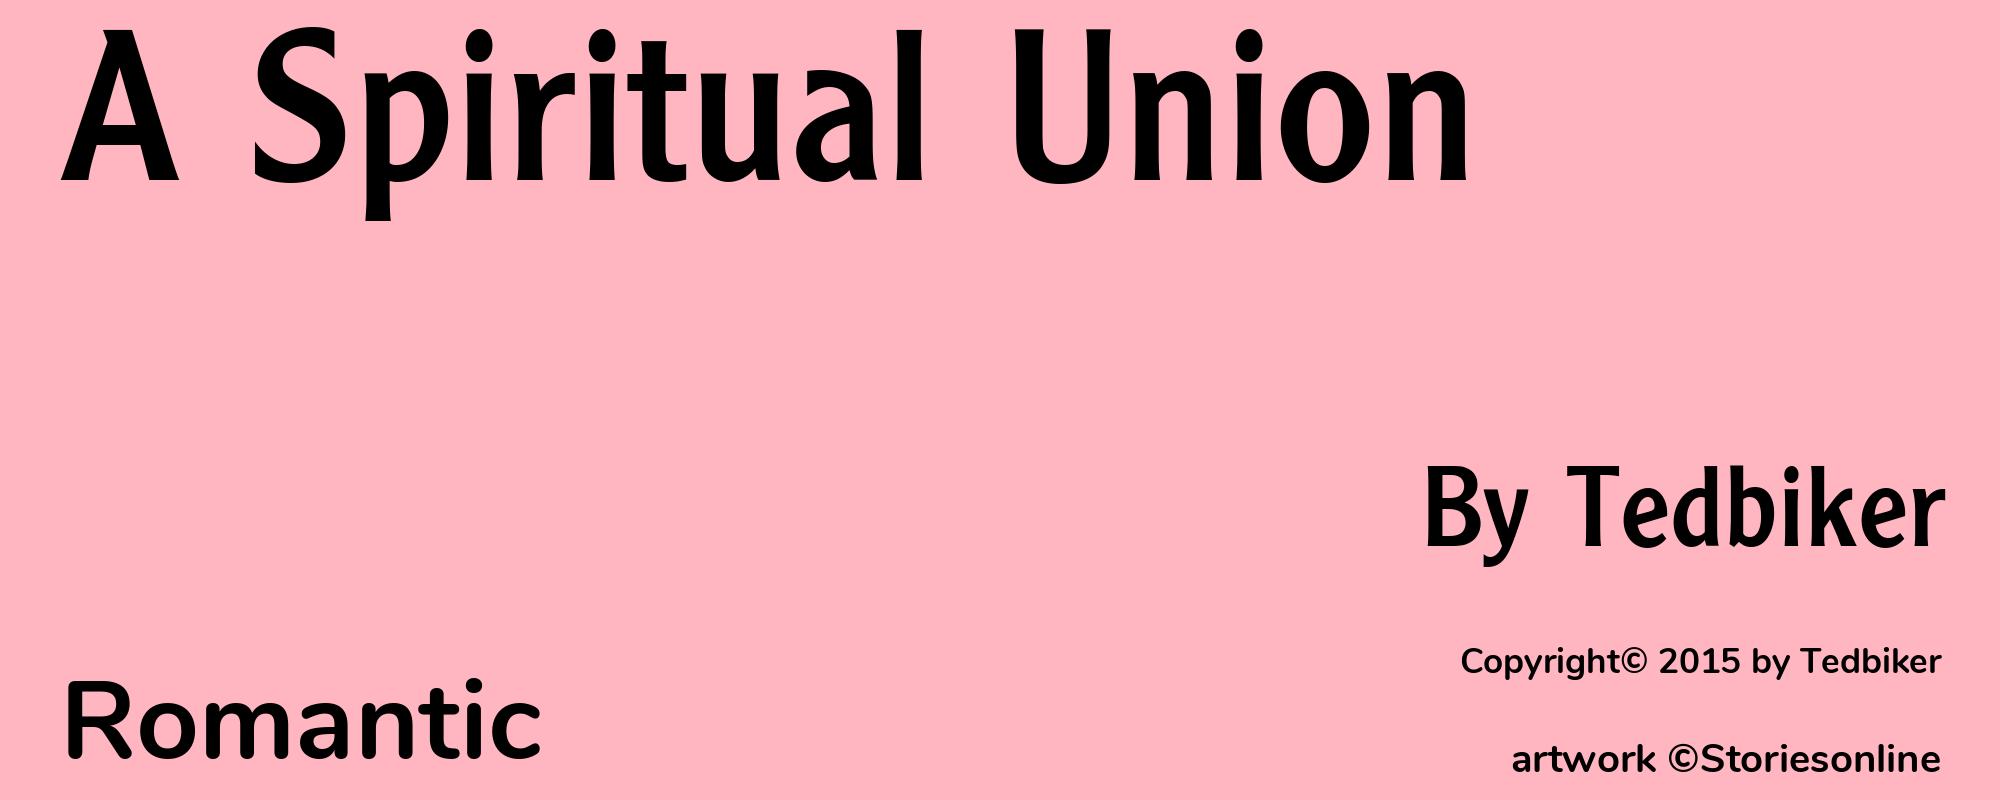 A Spiritual Union - Cover